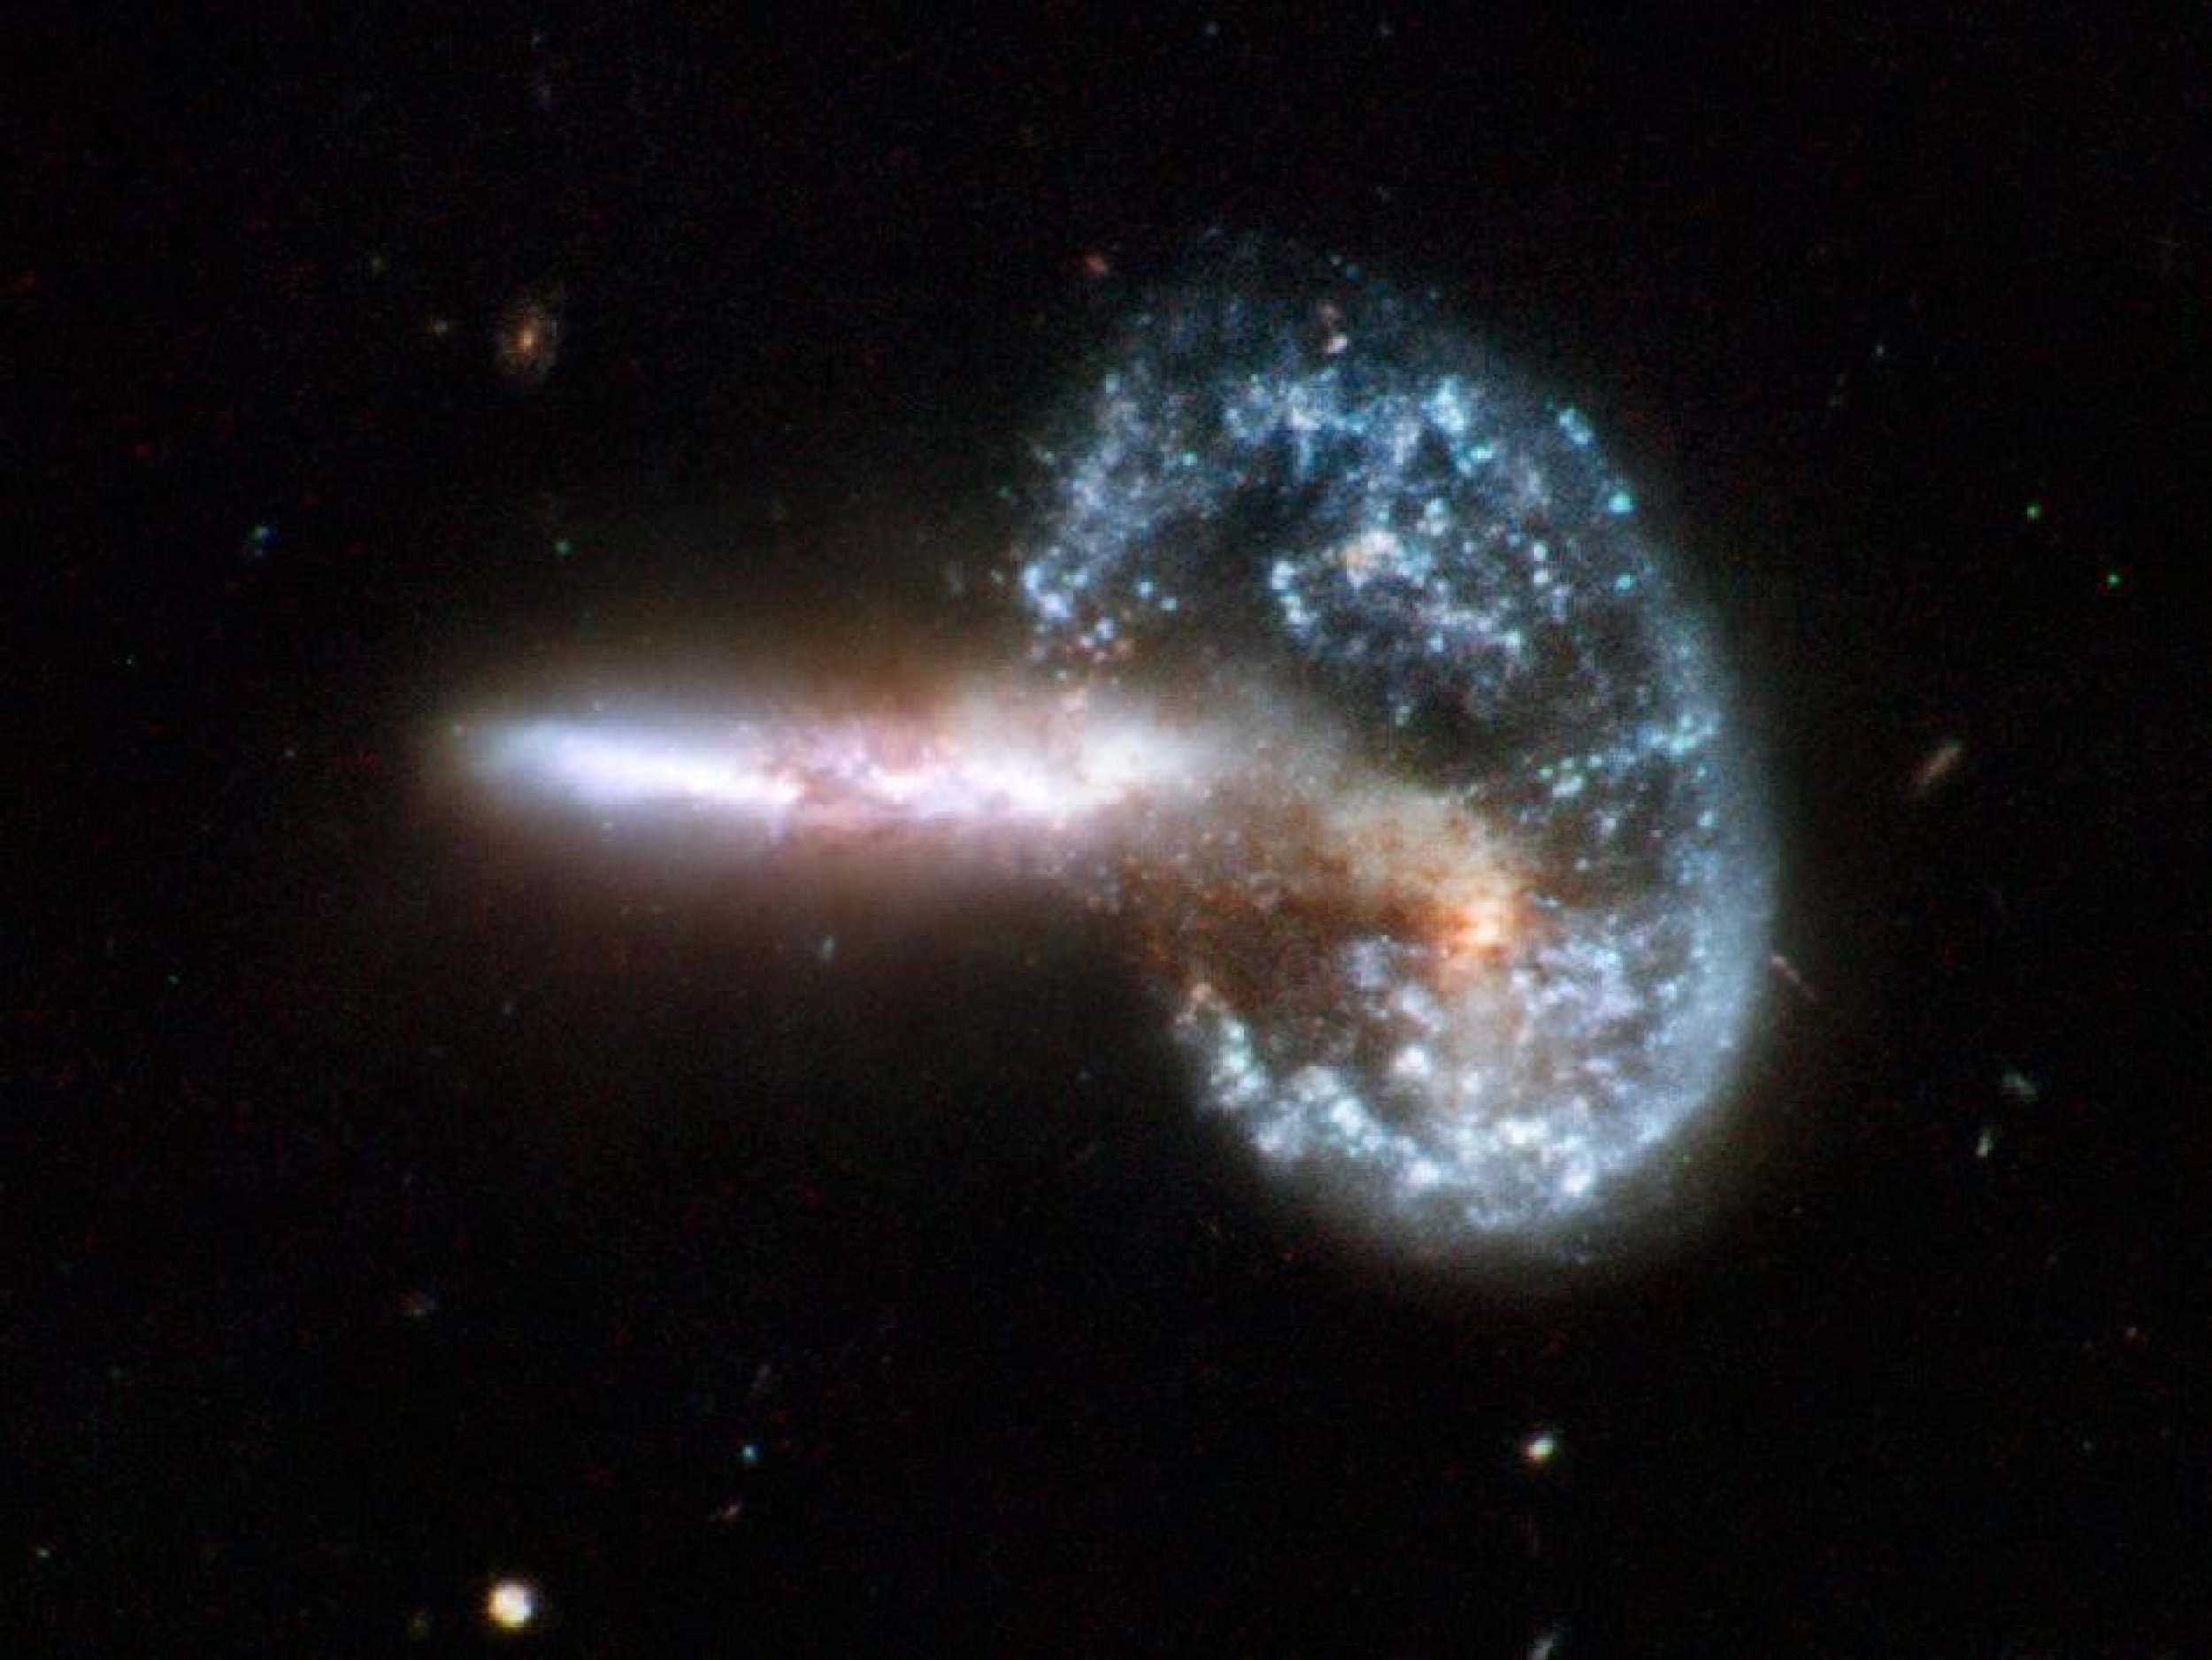 Galaxies Collide